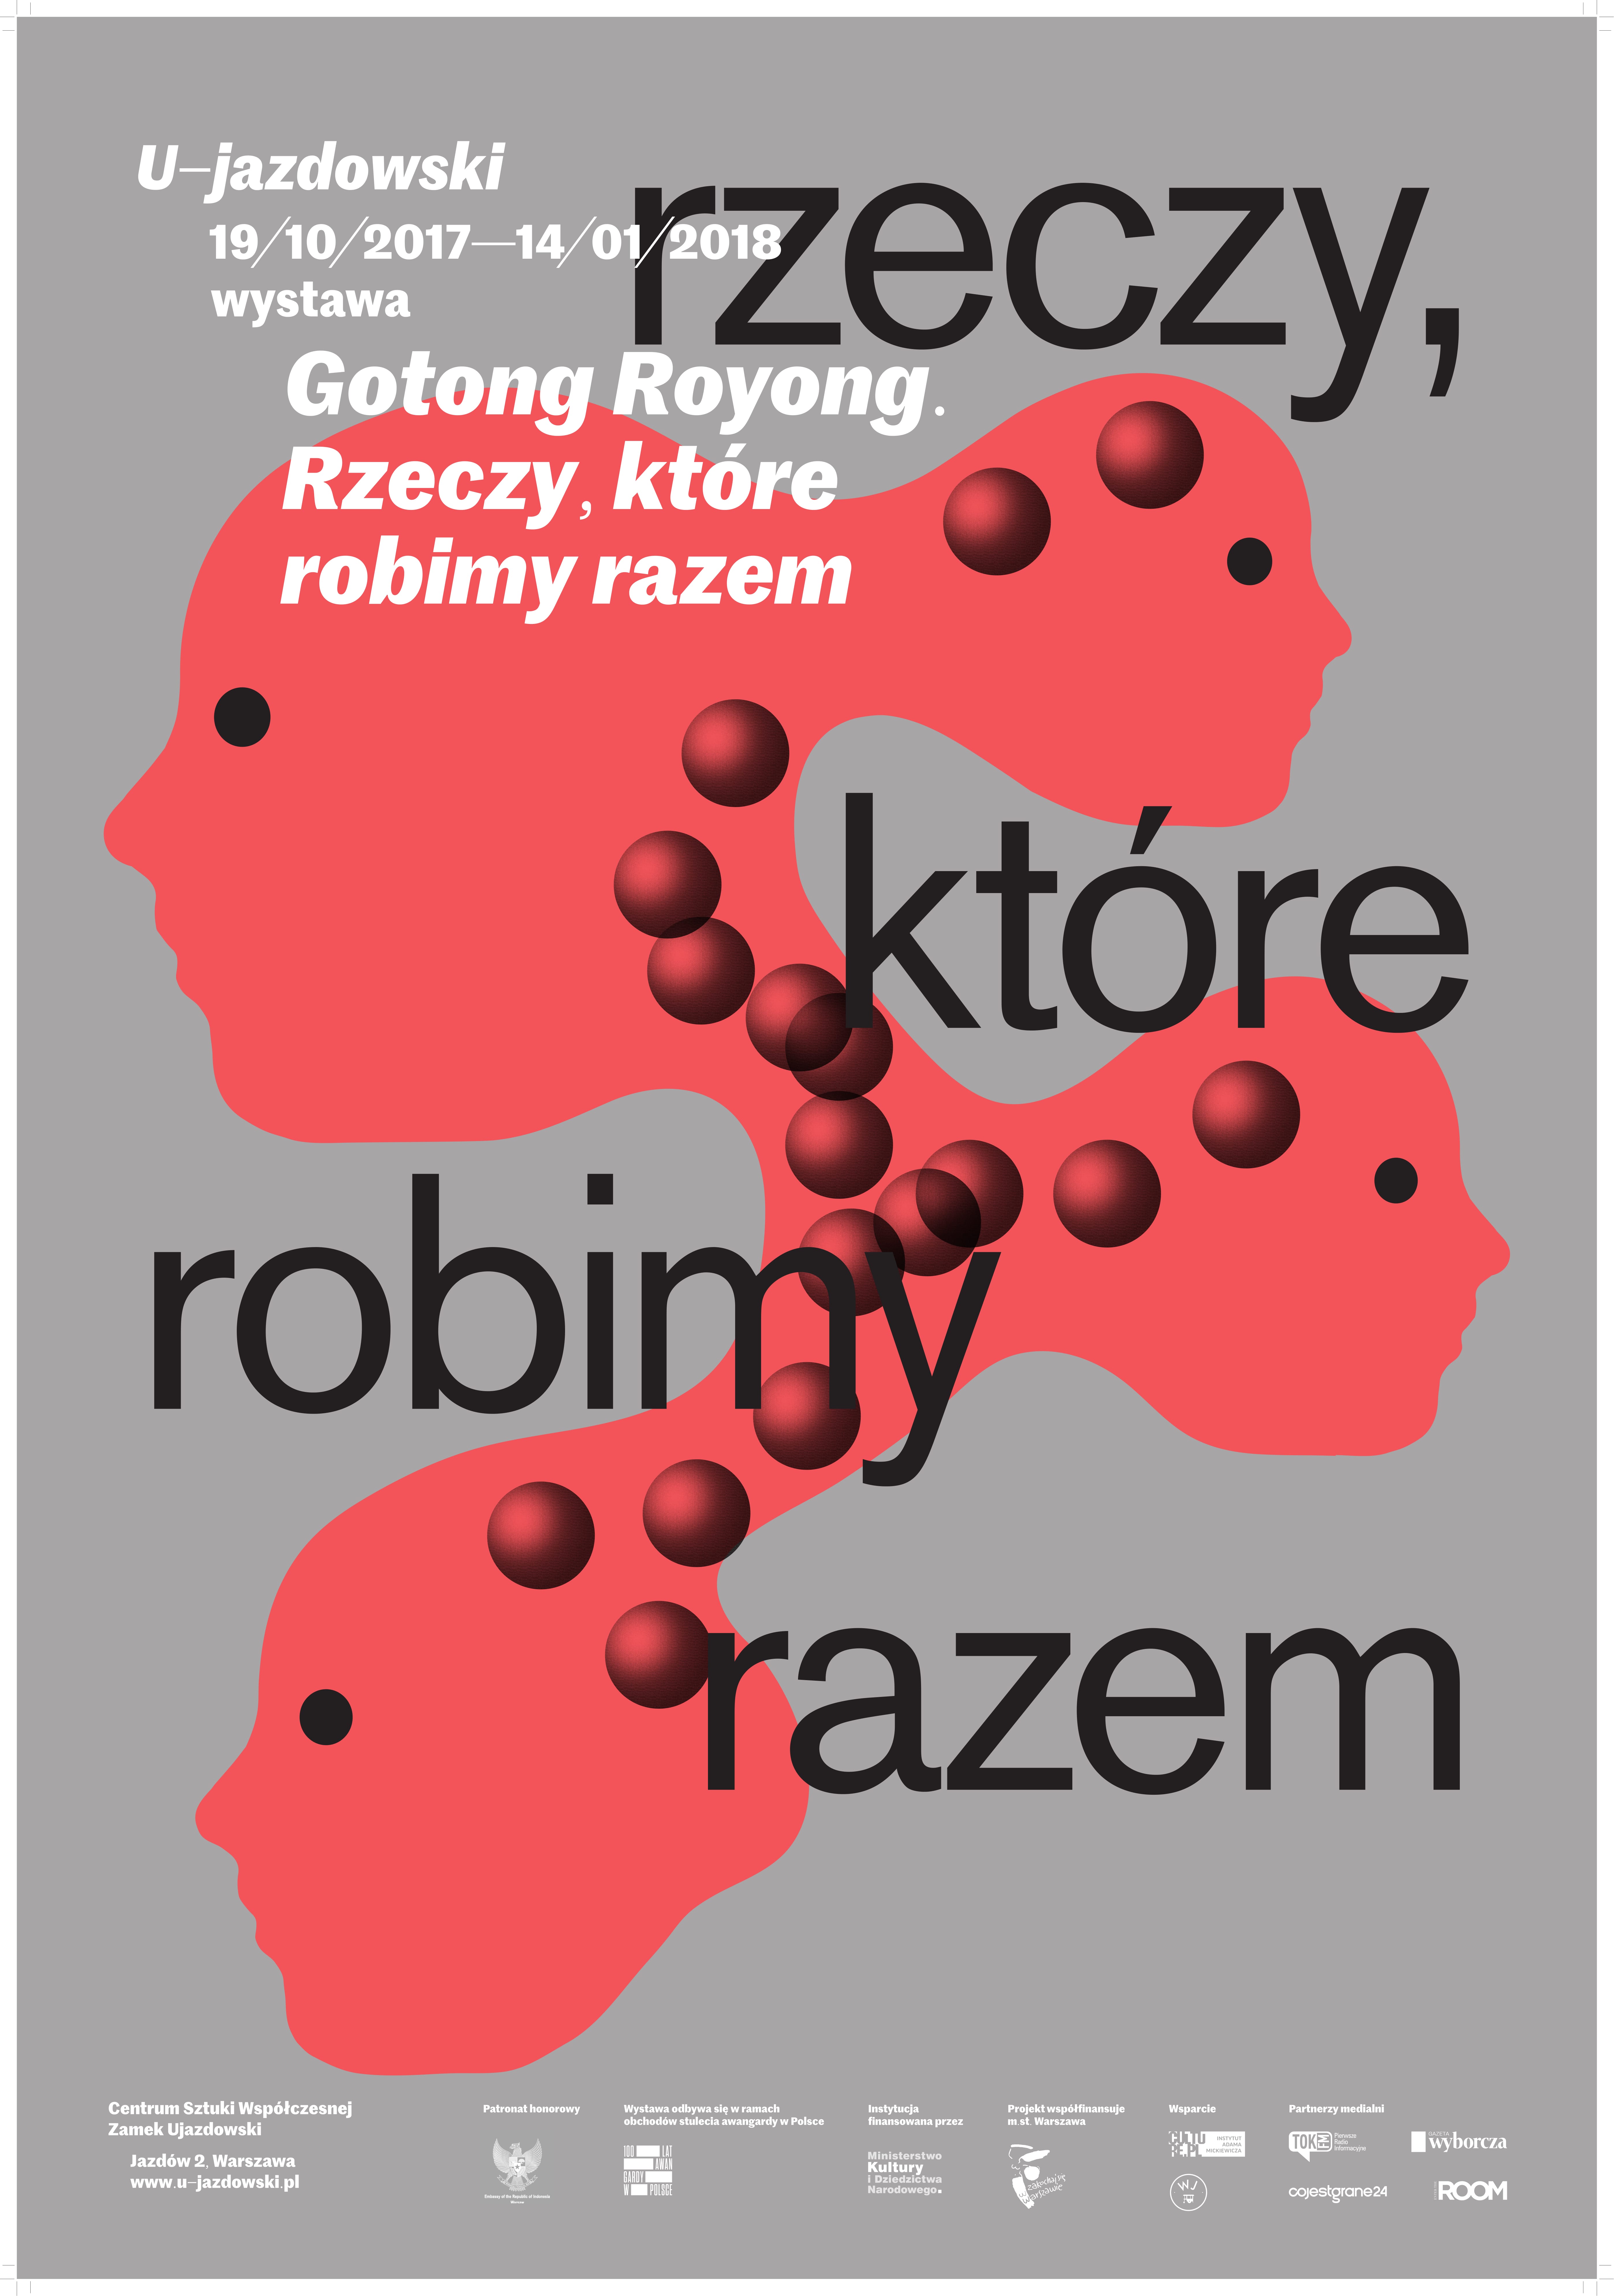 Gotong Royong